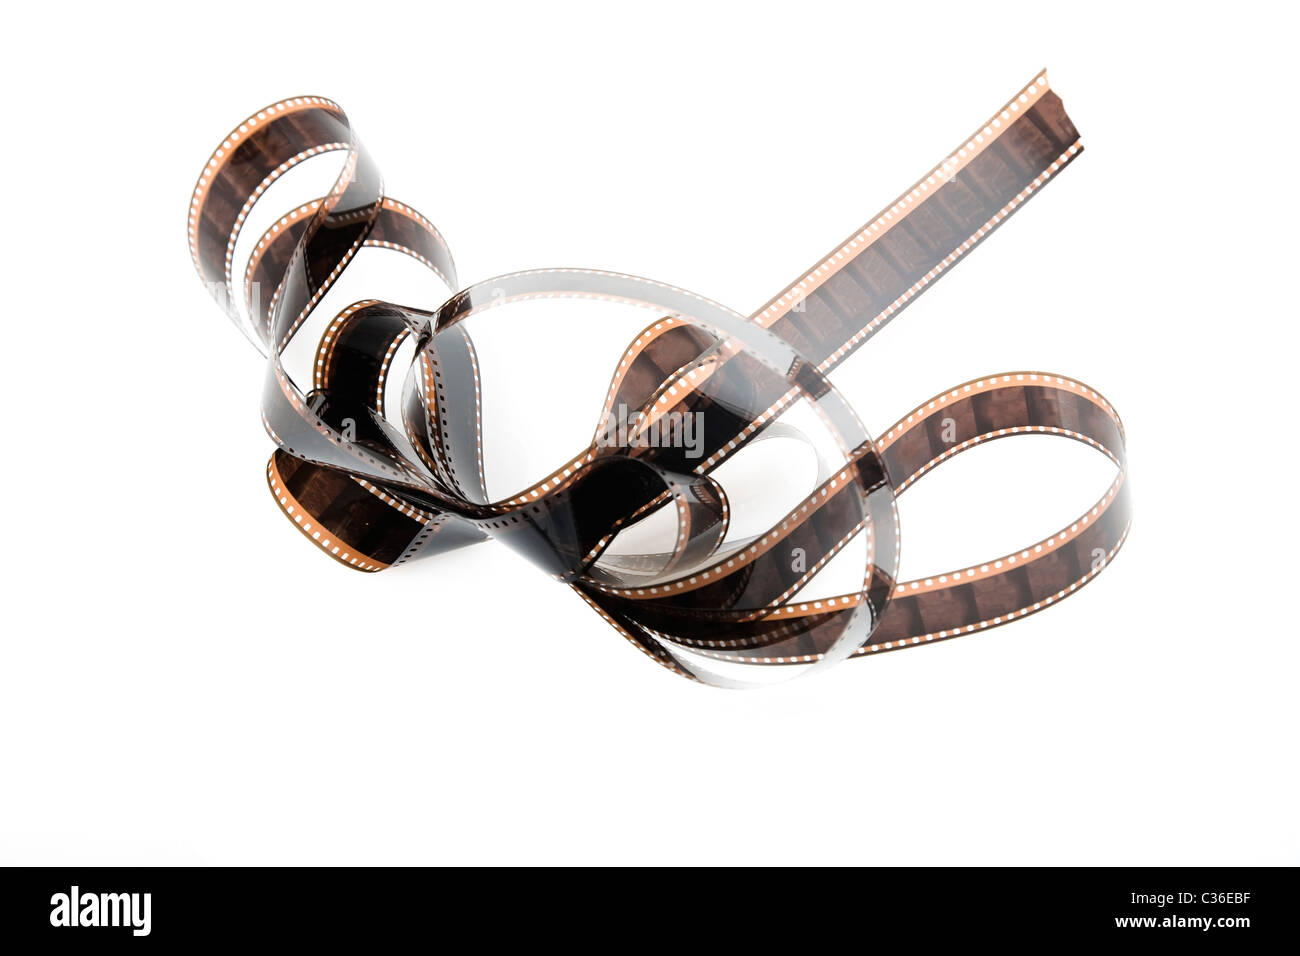 Dettagliato di close-up di una striscia di film, bobina di pellicola su bianco Foto Stock